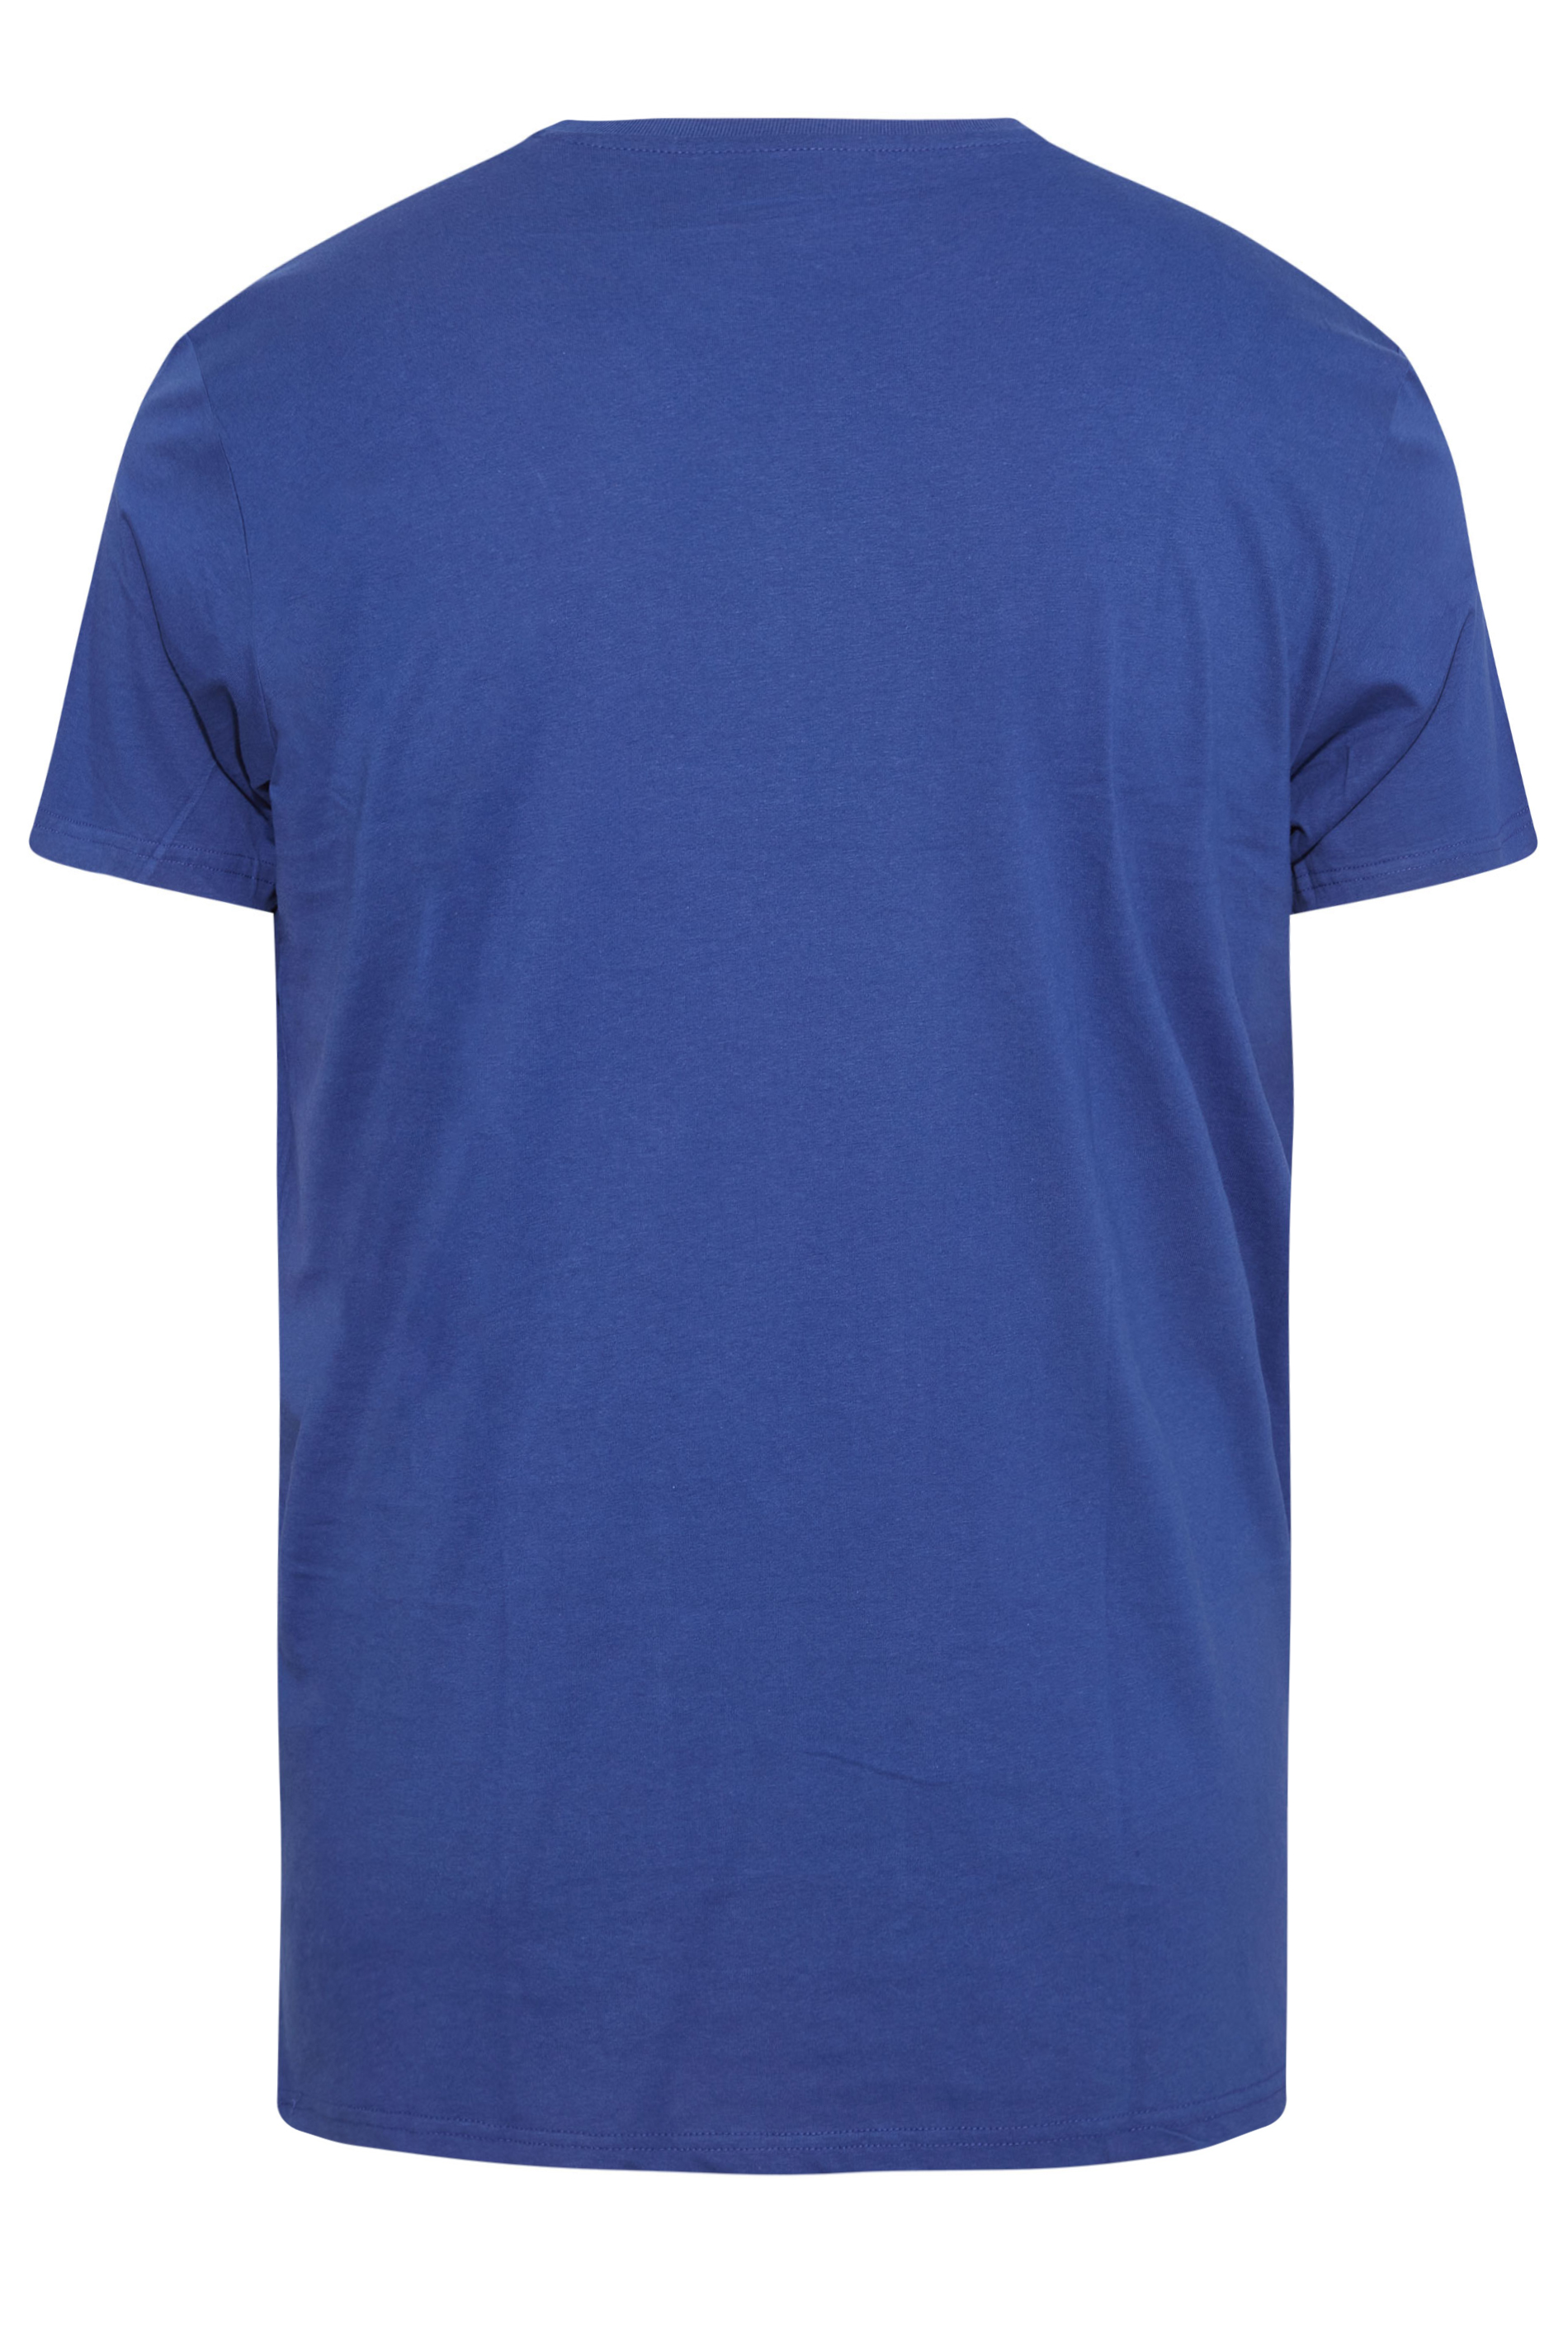 BadRhino Royal Blue Core T-Shirt | BadRhino